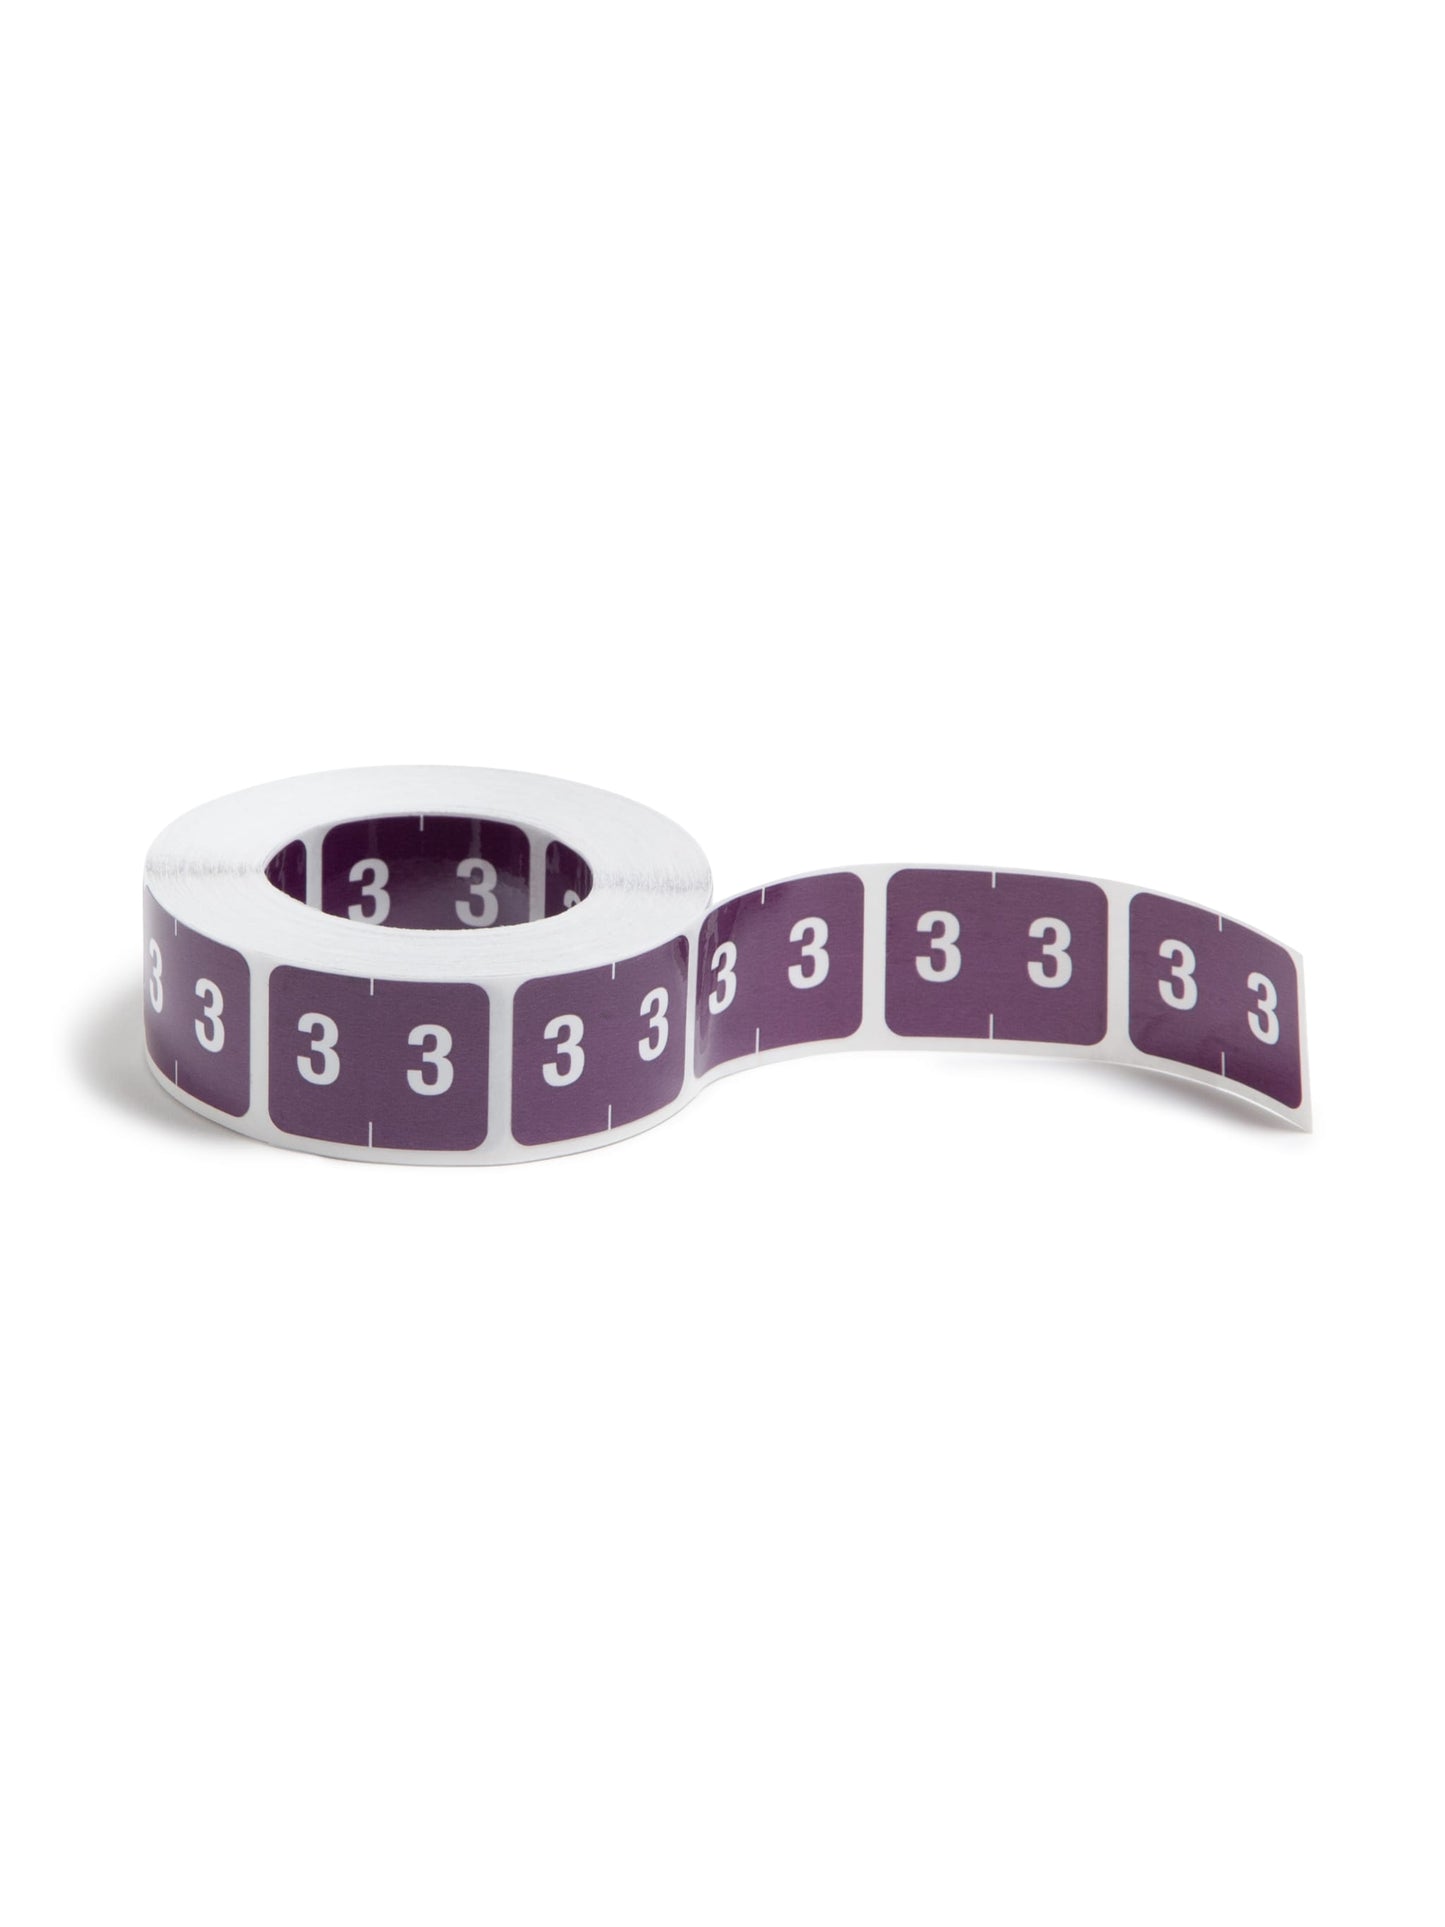 DCCRN Color-Coded Numeric Labels - Rolls, Purple Color, 1-1/4" X 1" Size, Set of 1, 086486673433